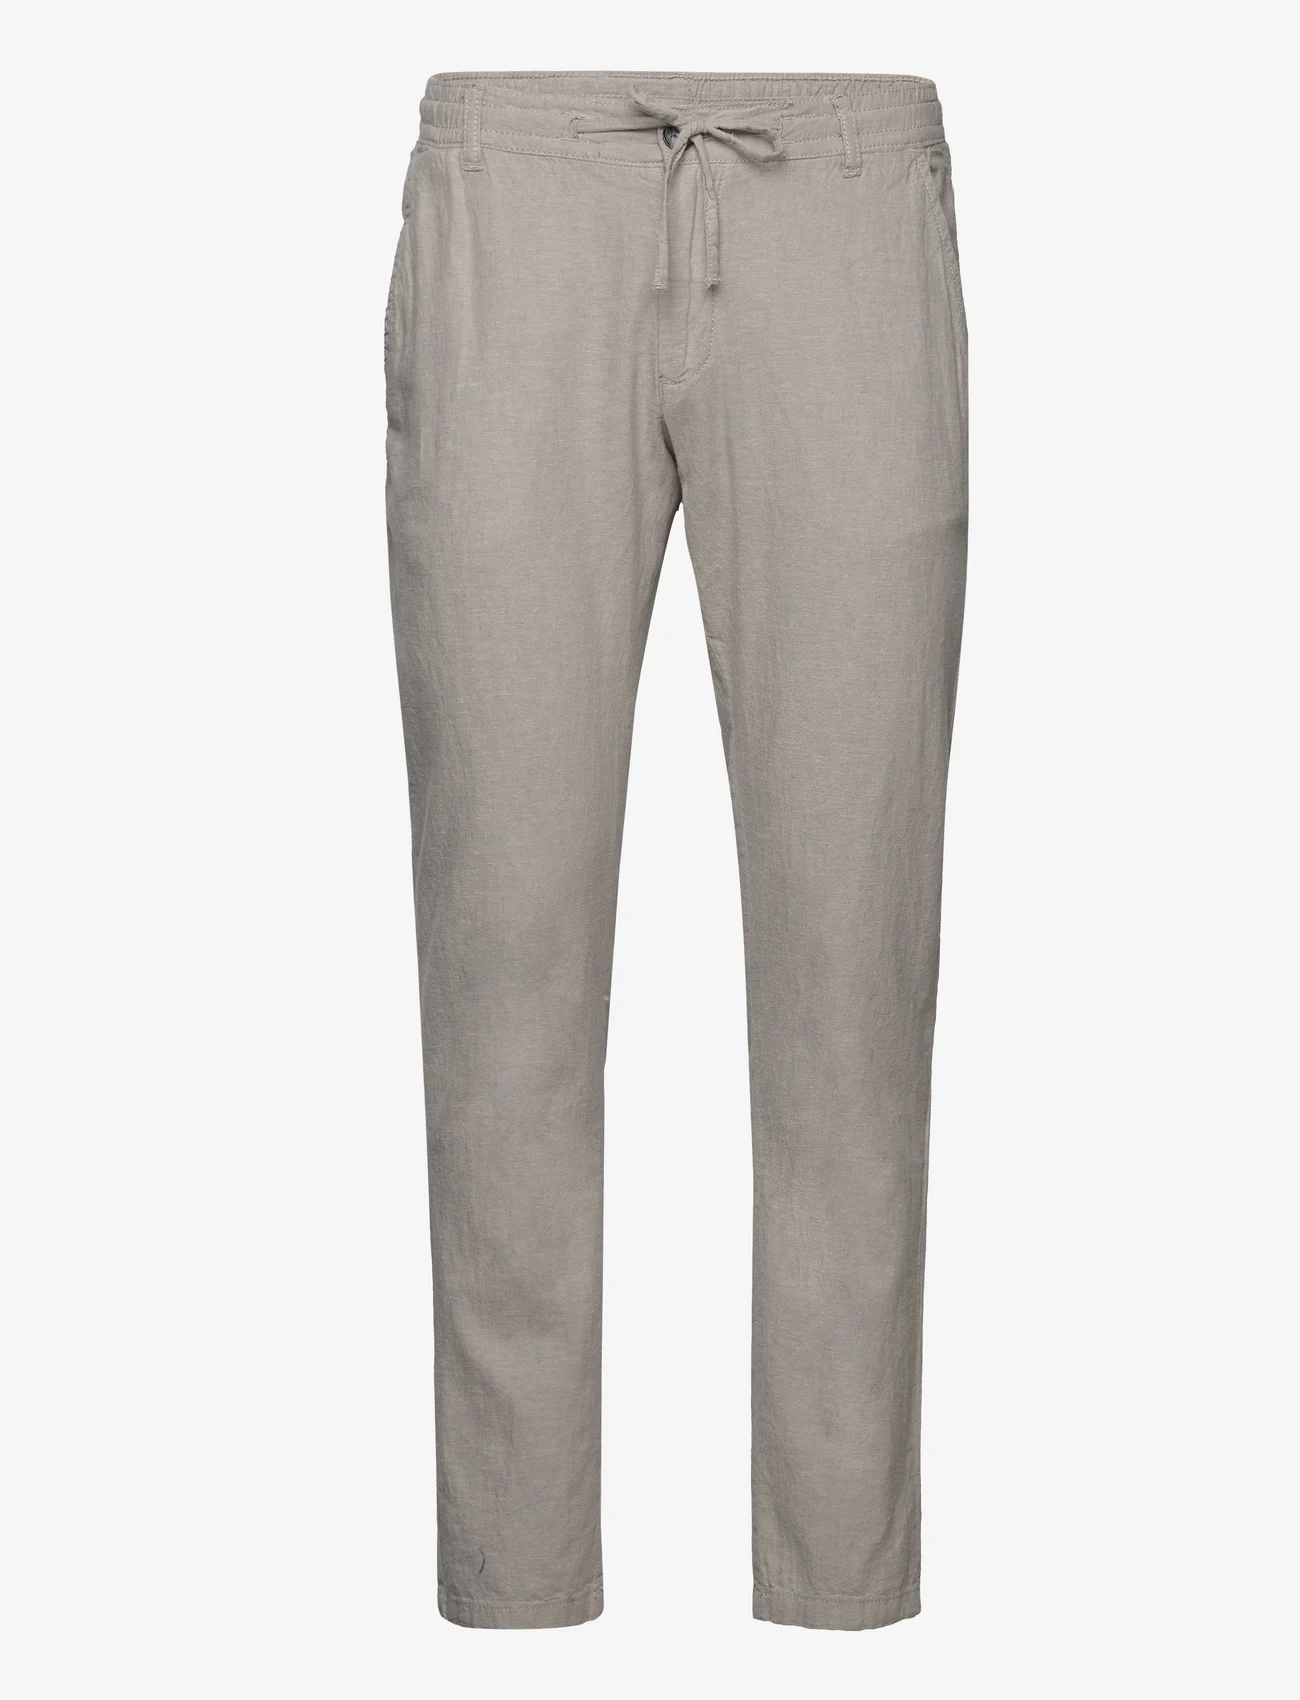 Lindbergh - Linen pants - leinenhosen - grey - 0